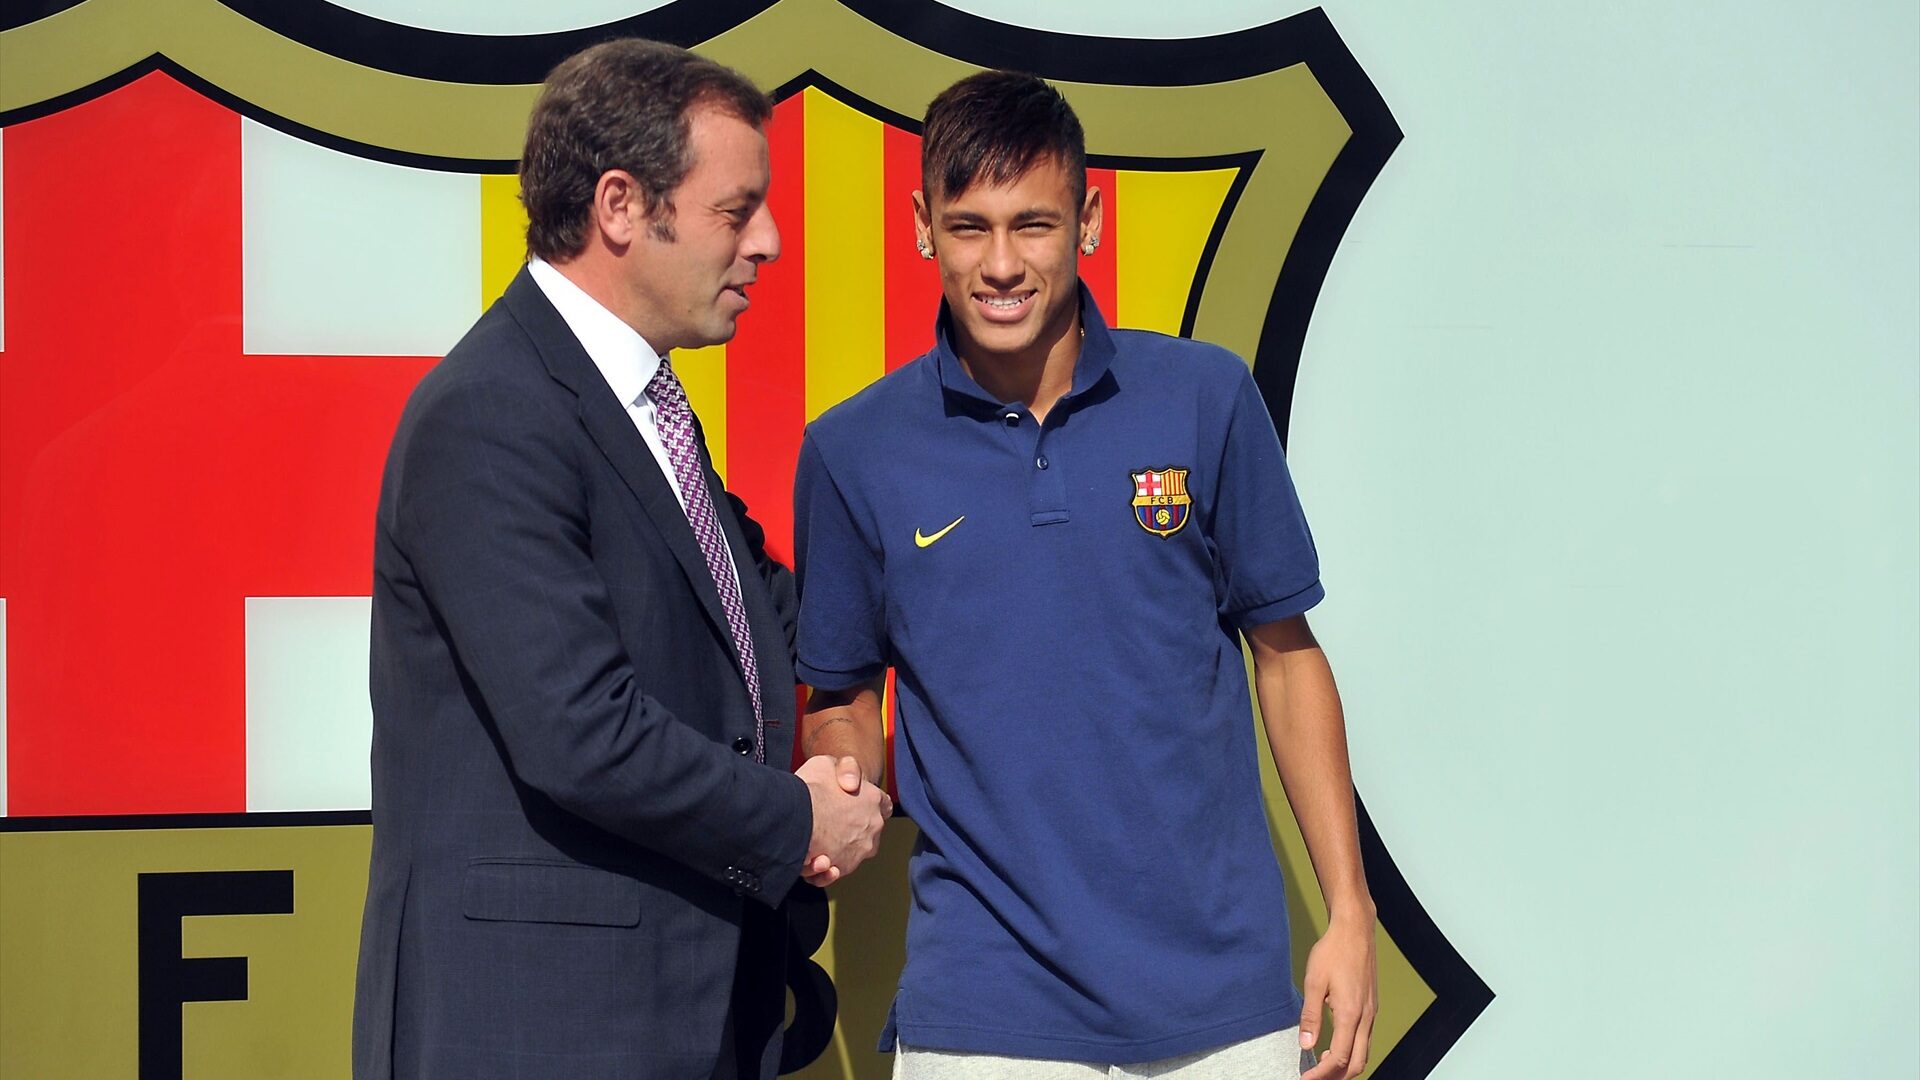 El jugador Neymar con Sandro Rosell